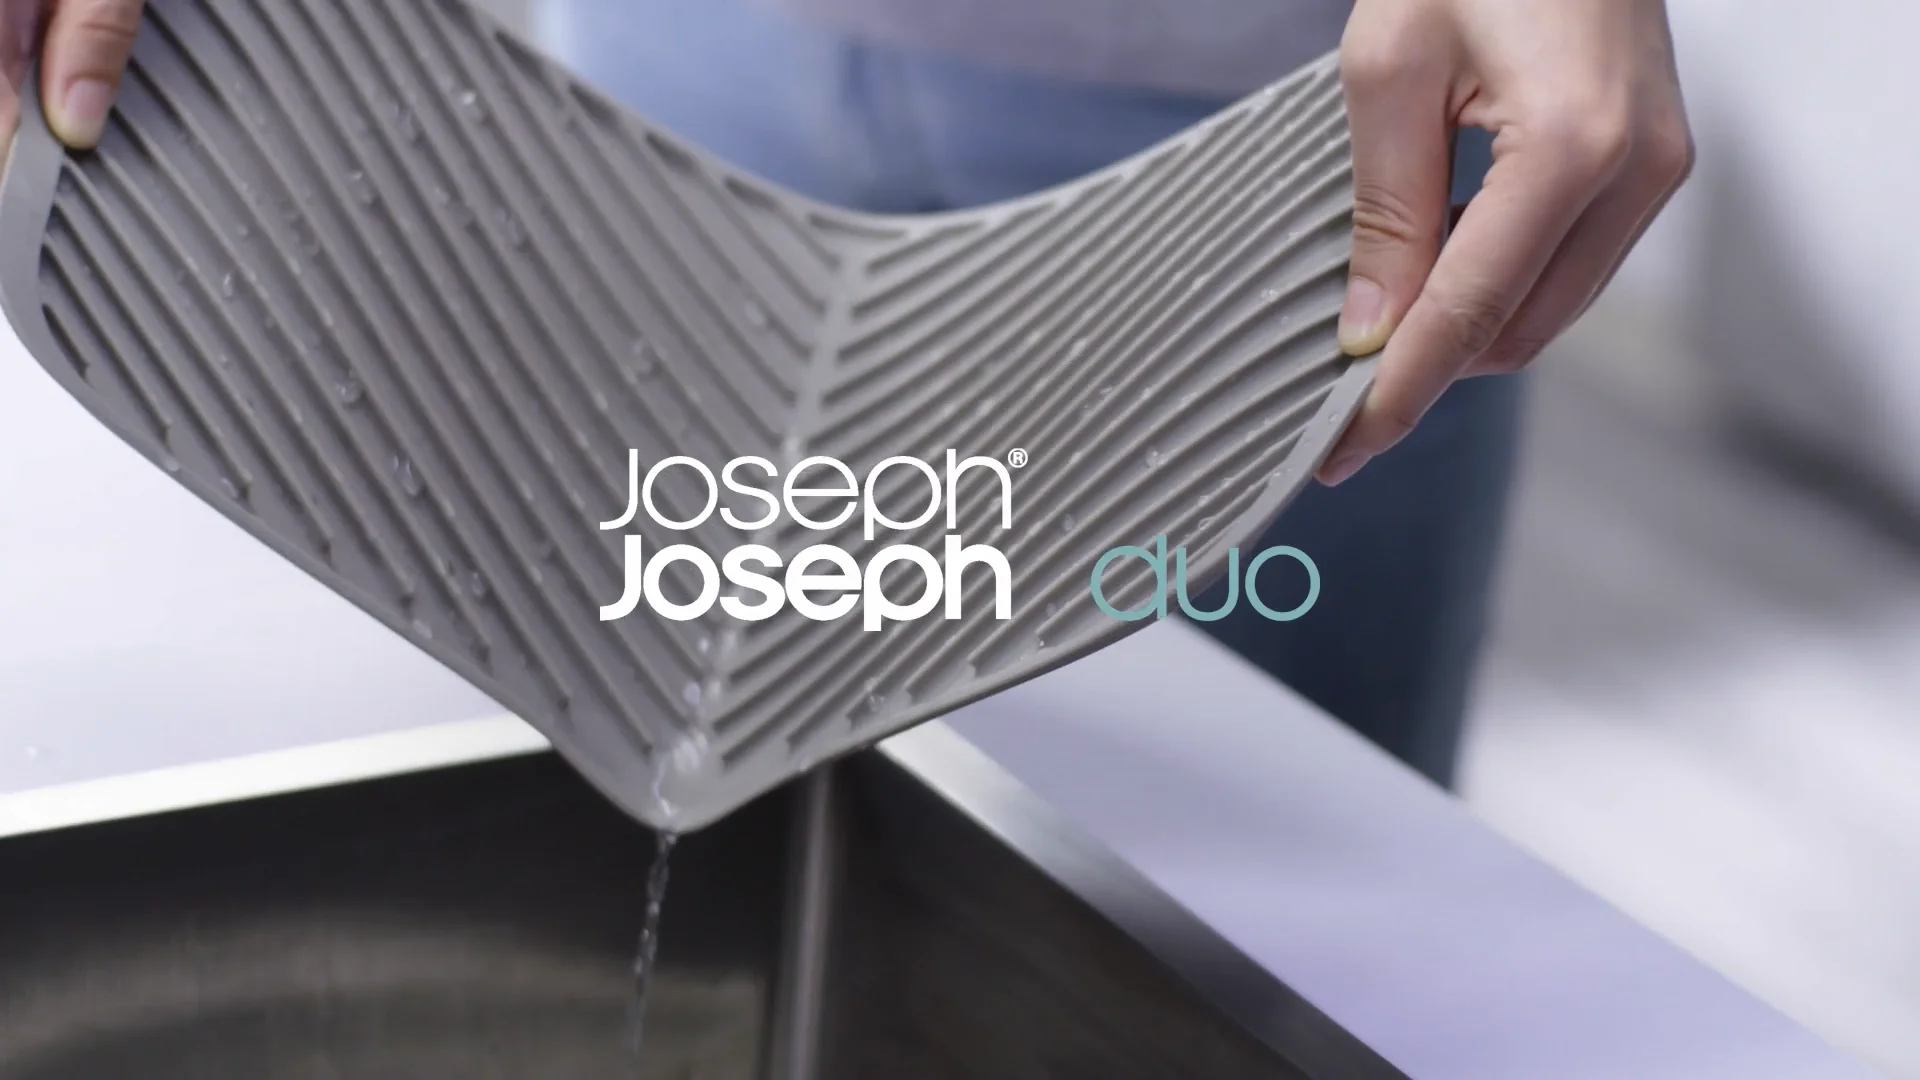 Joseph Joseph DUO Foldable Draining Mat 80069 on Vimeo